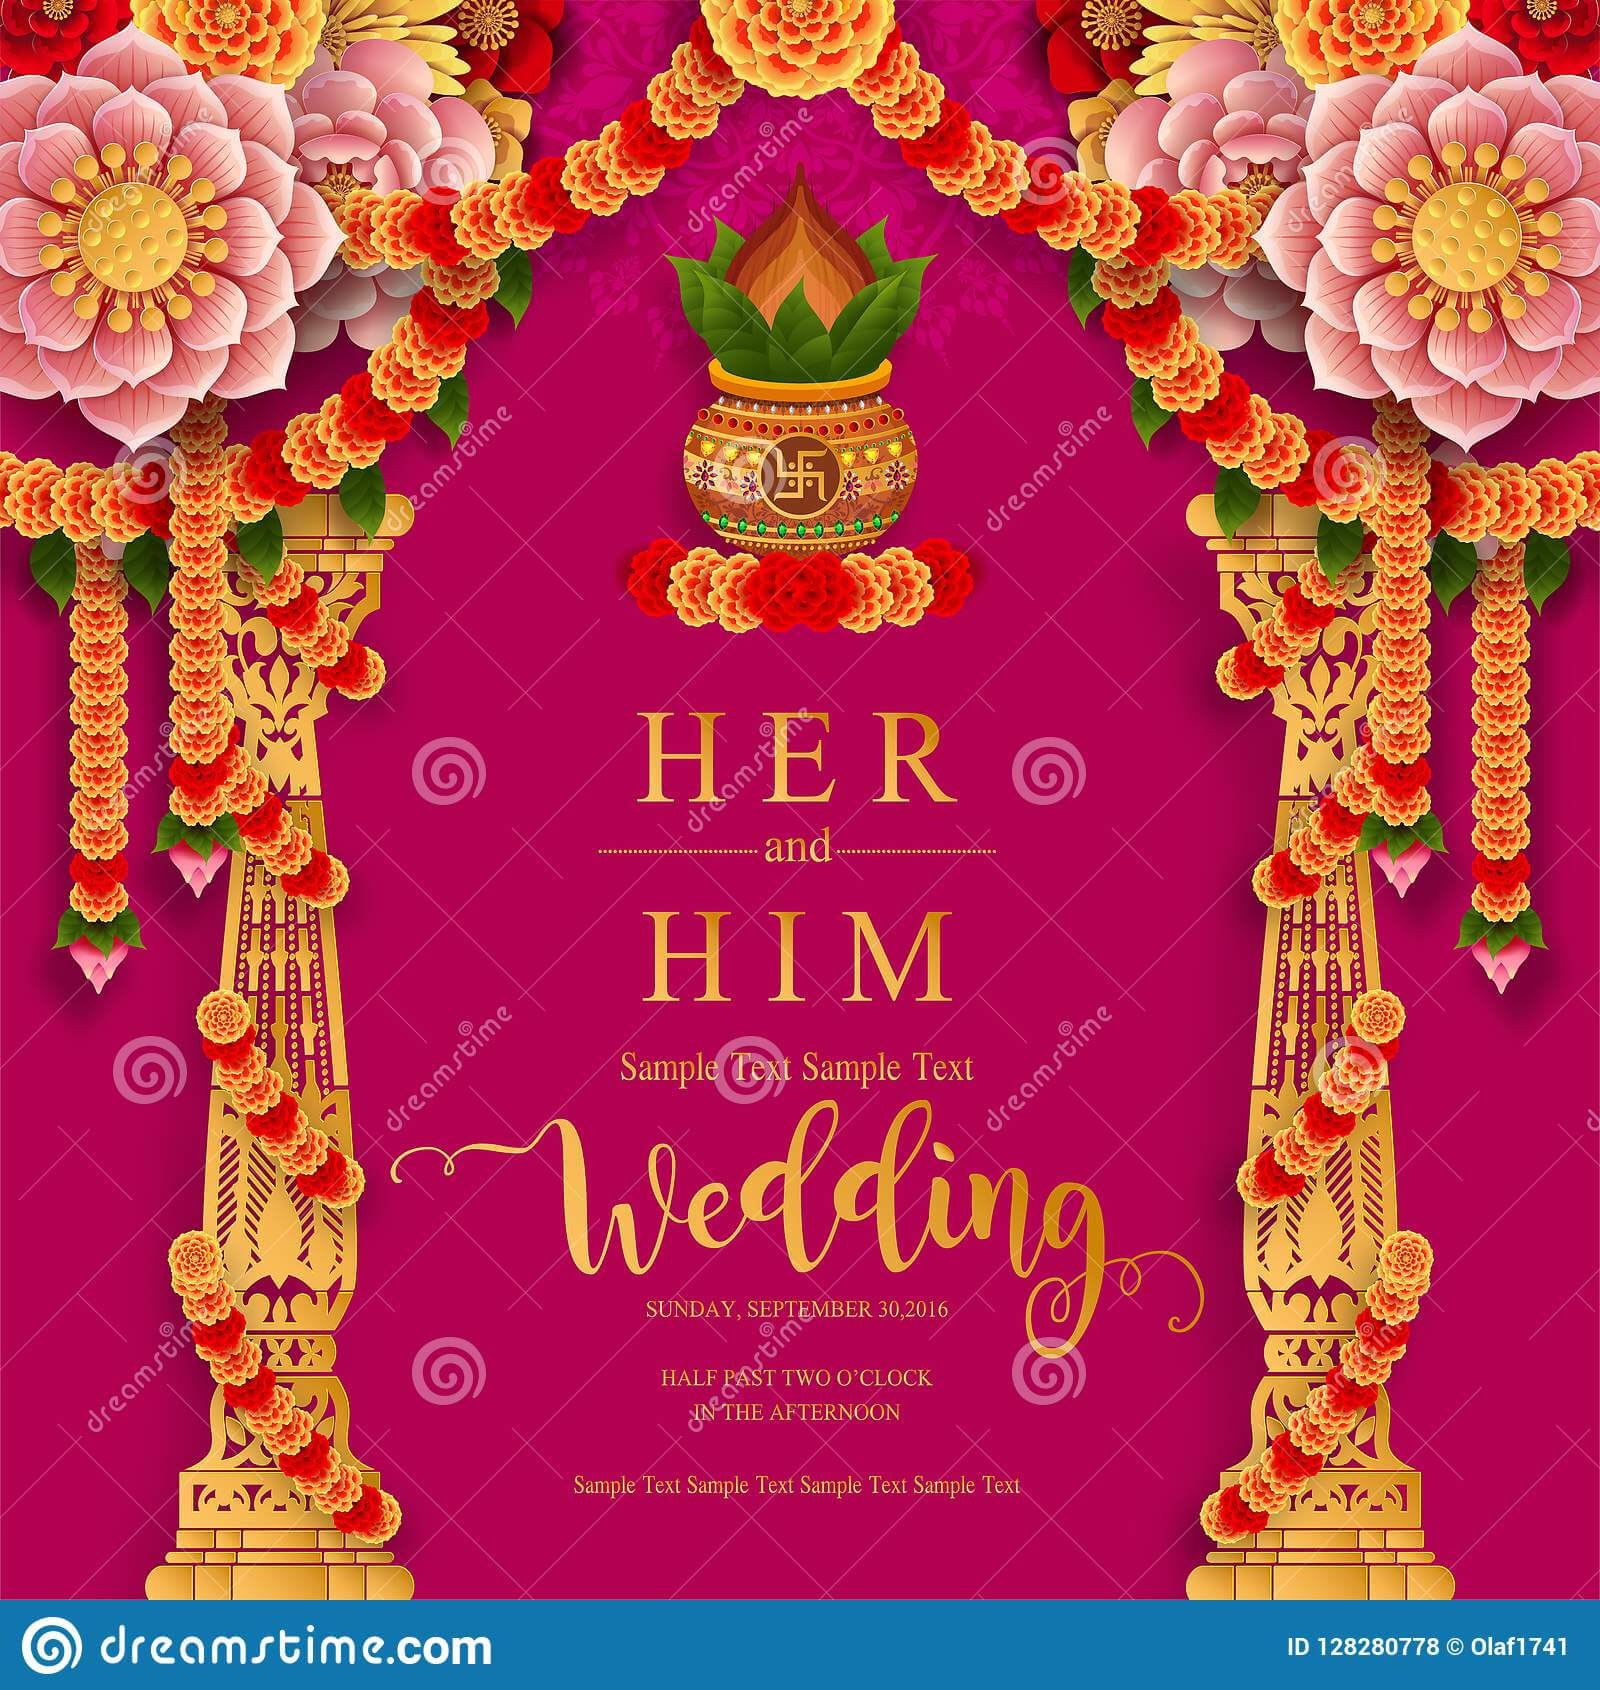 Indian Wedding Invitation Carddian Wedding Invitation Card For Indian Wedding Cards Design Templates